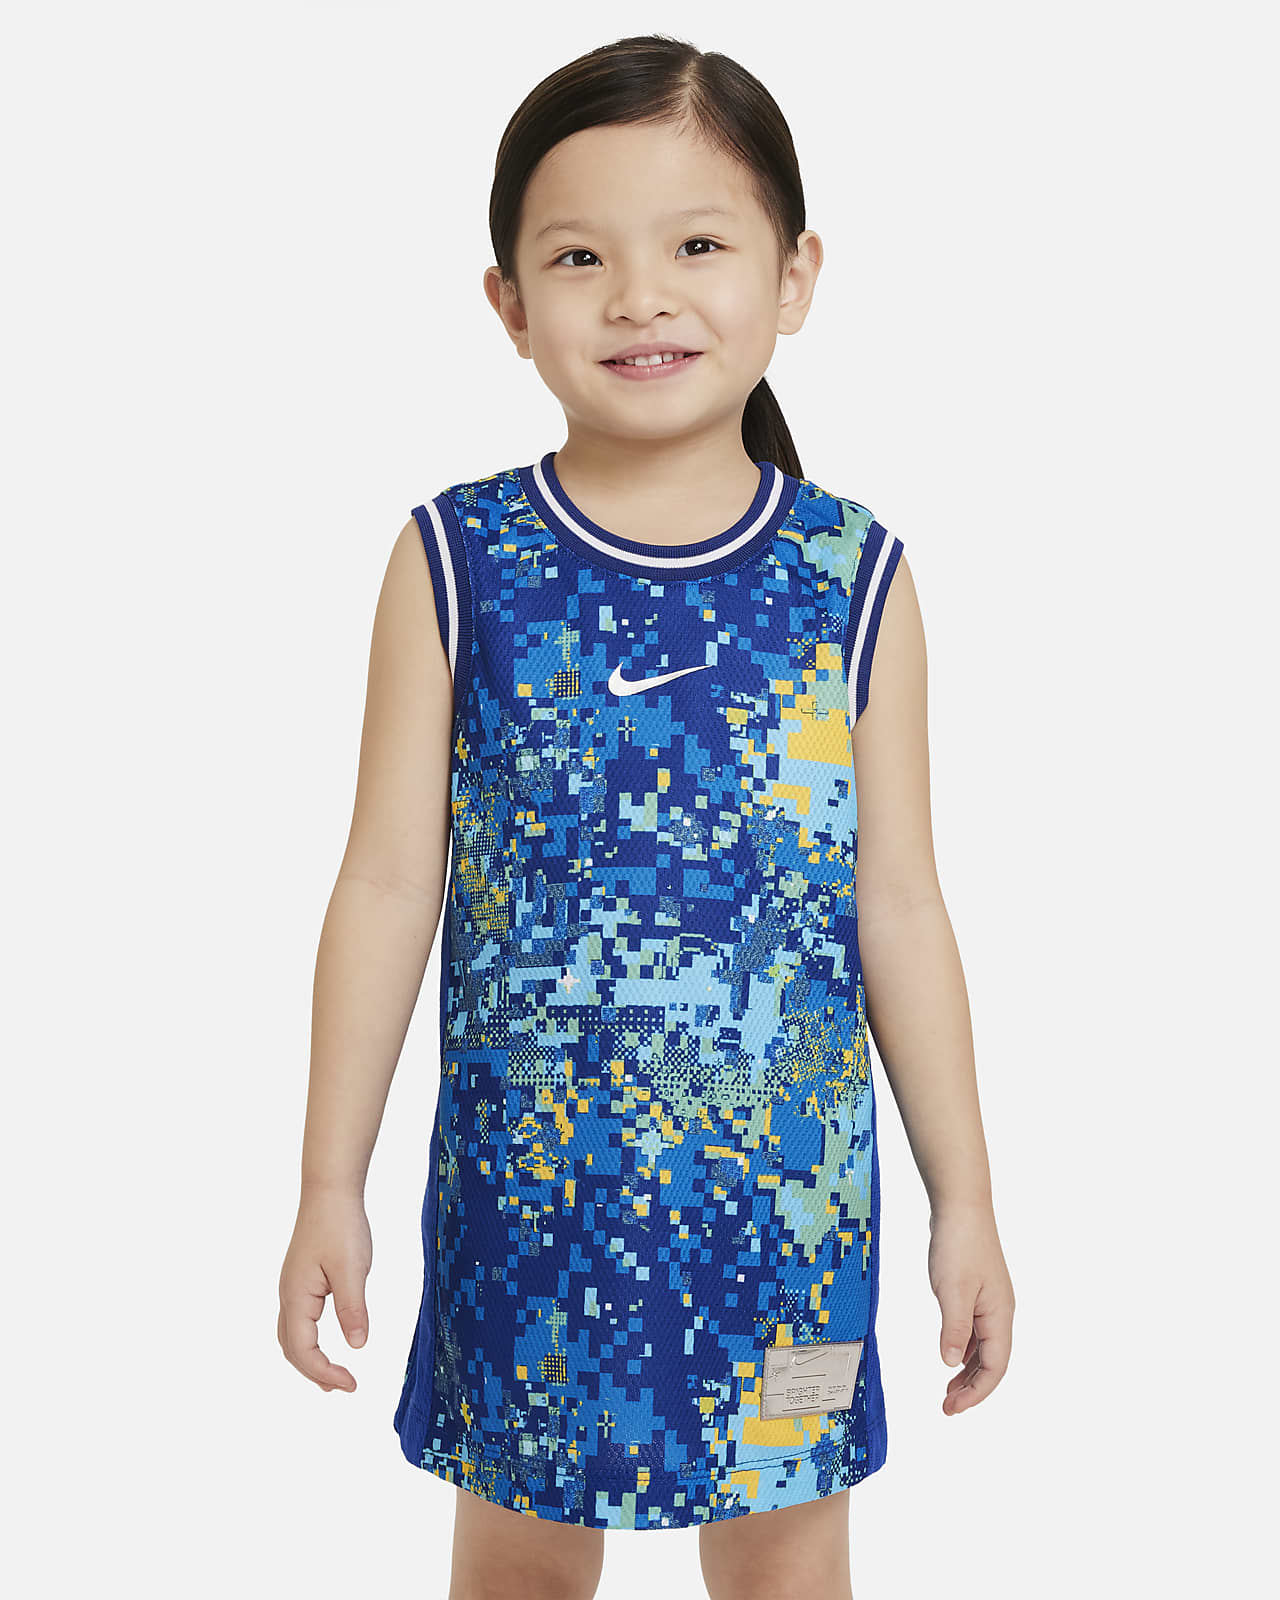 Nike All-Star Dress Toddler Dress